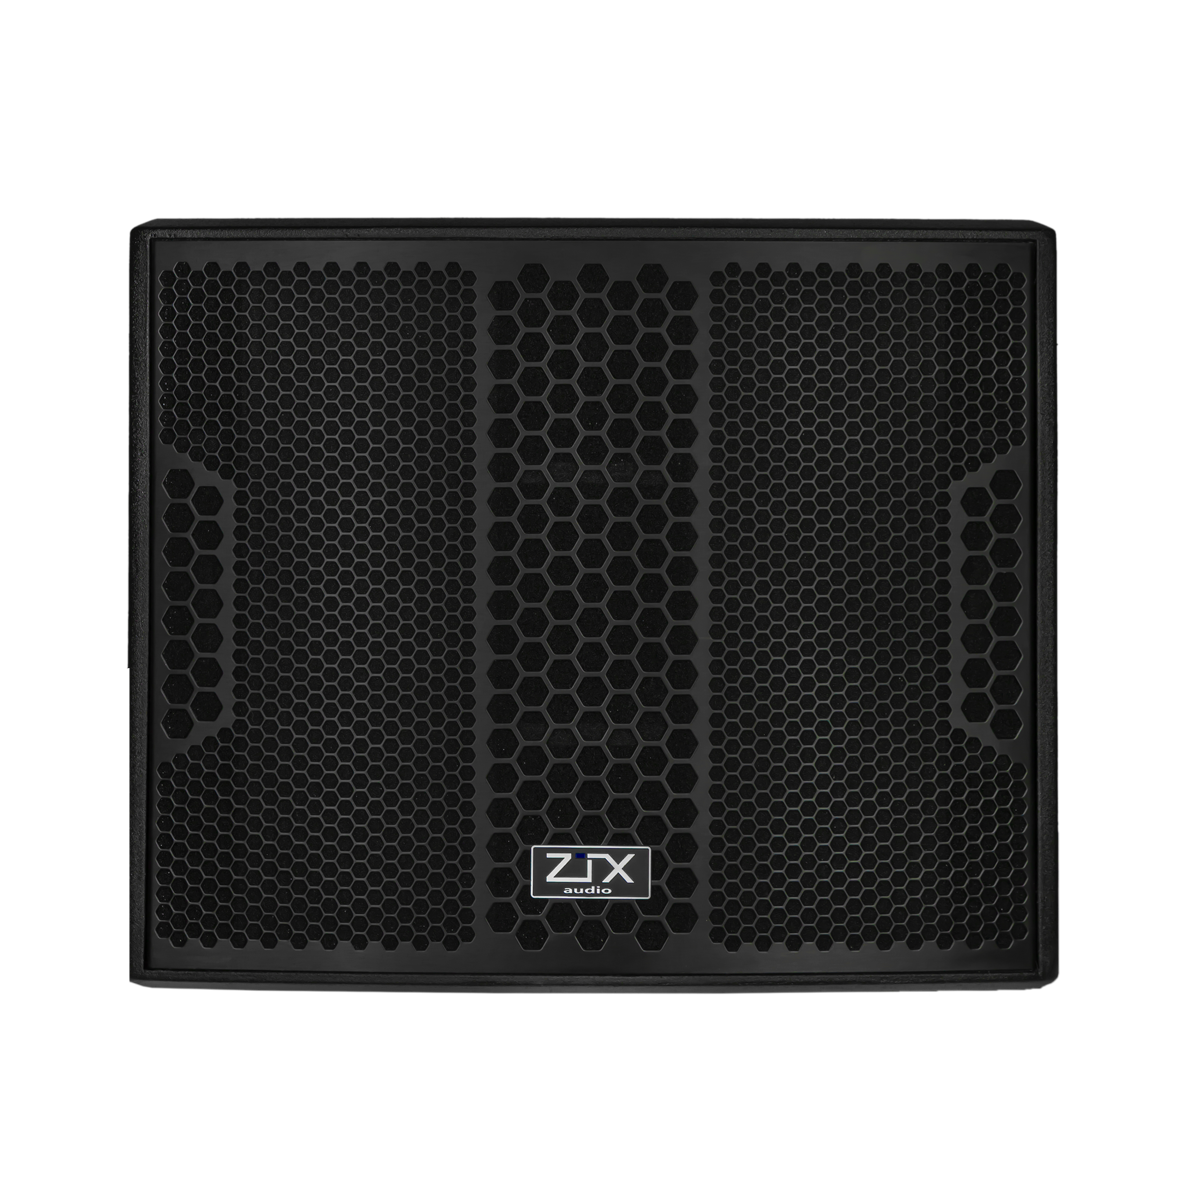 ZTX audio VR-718A активный сабвуфер с DSP процессором, 2000Вт, 18" динамик